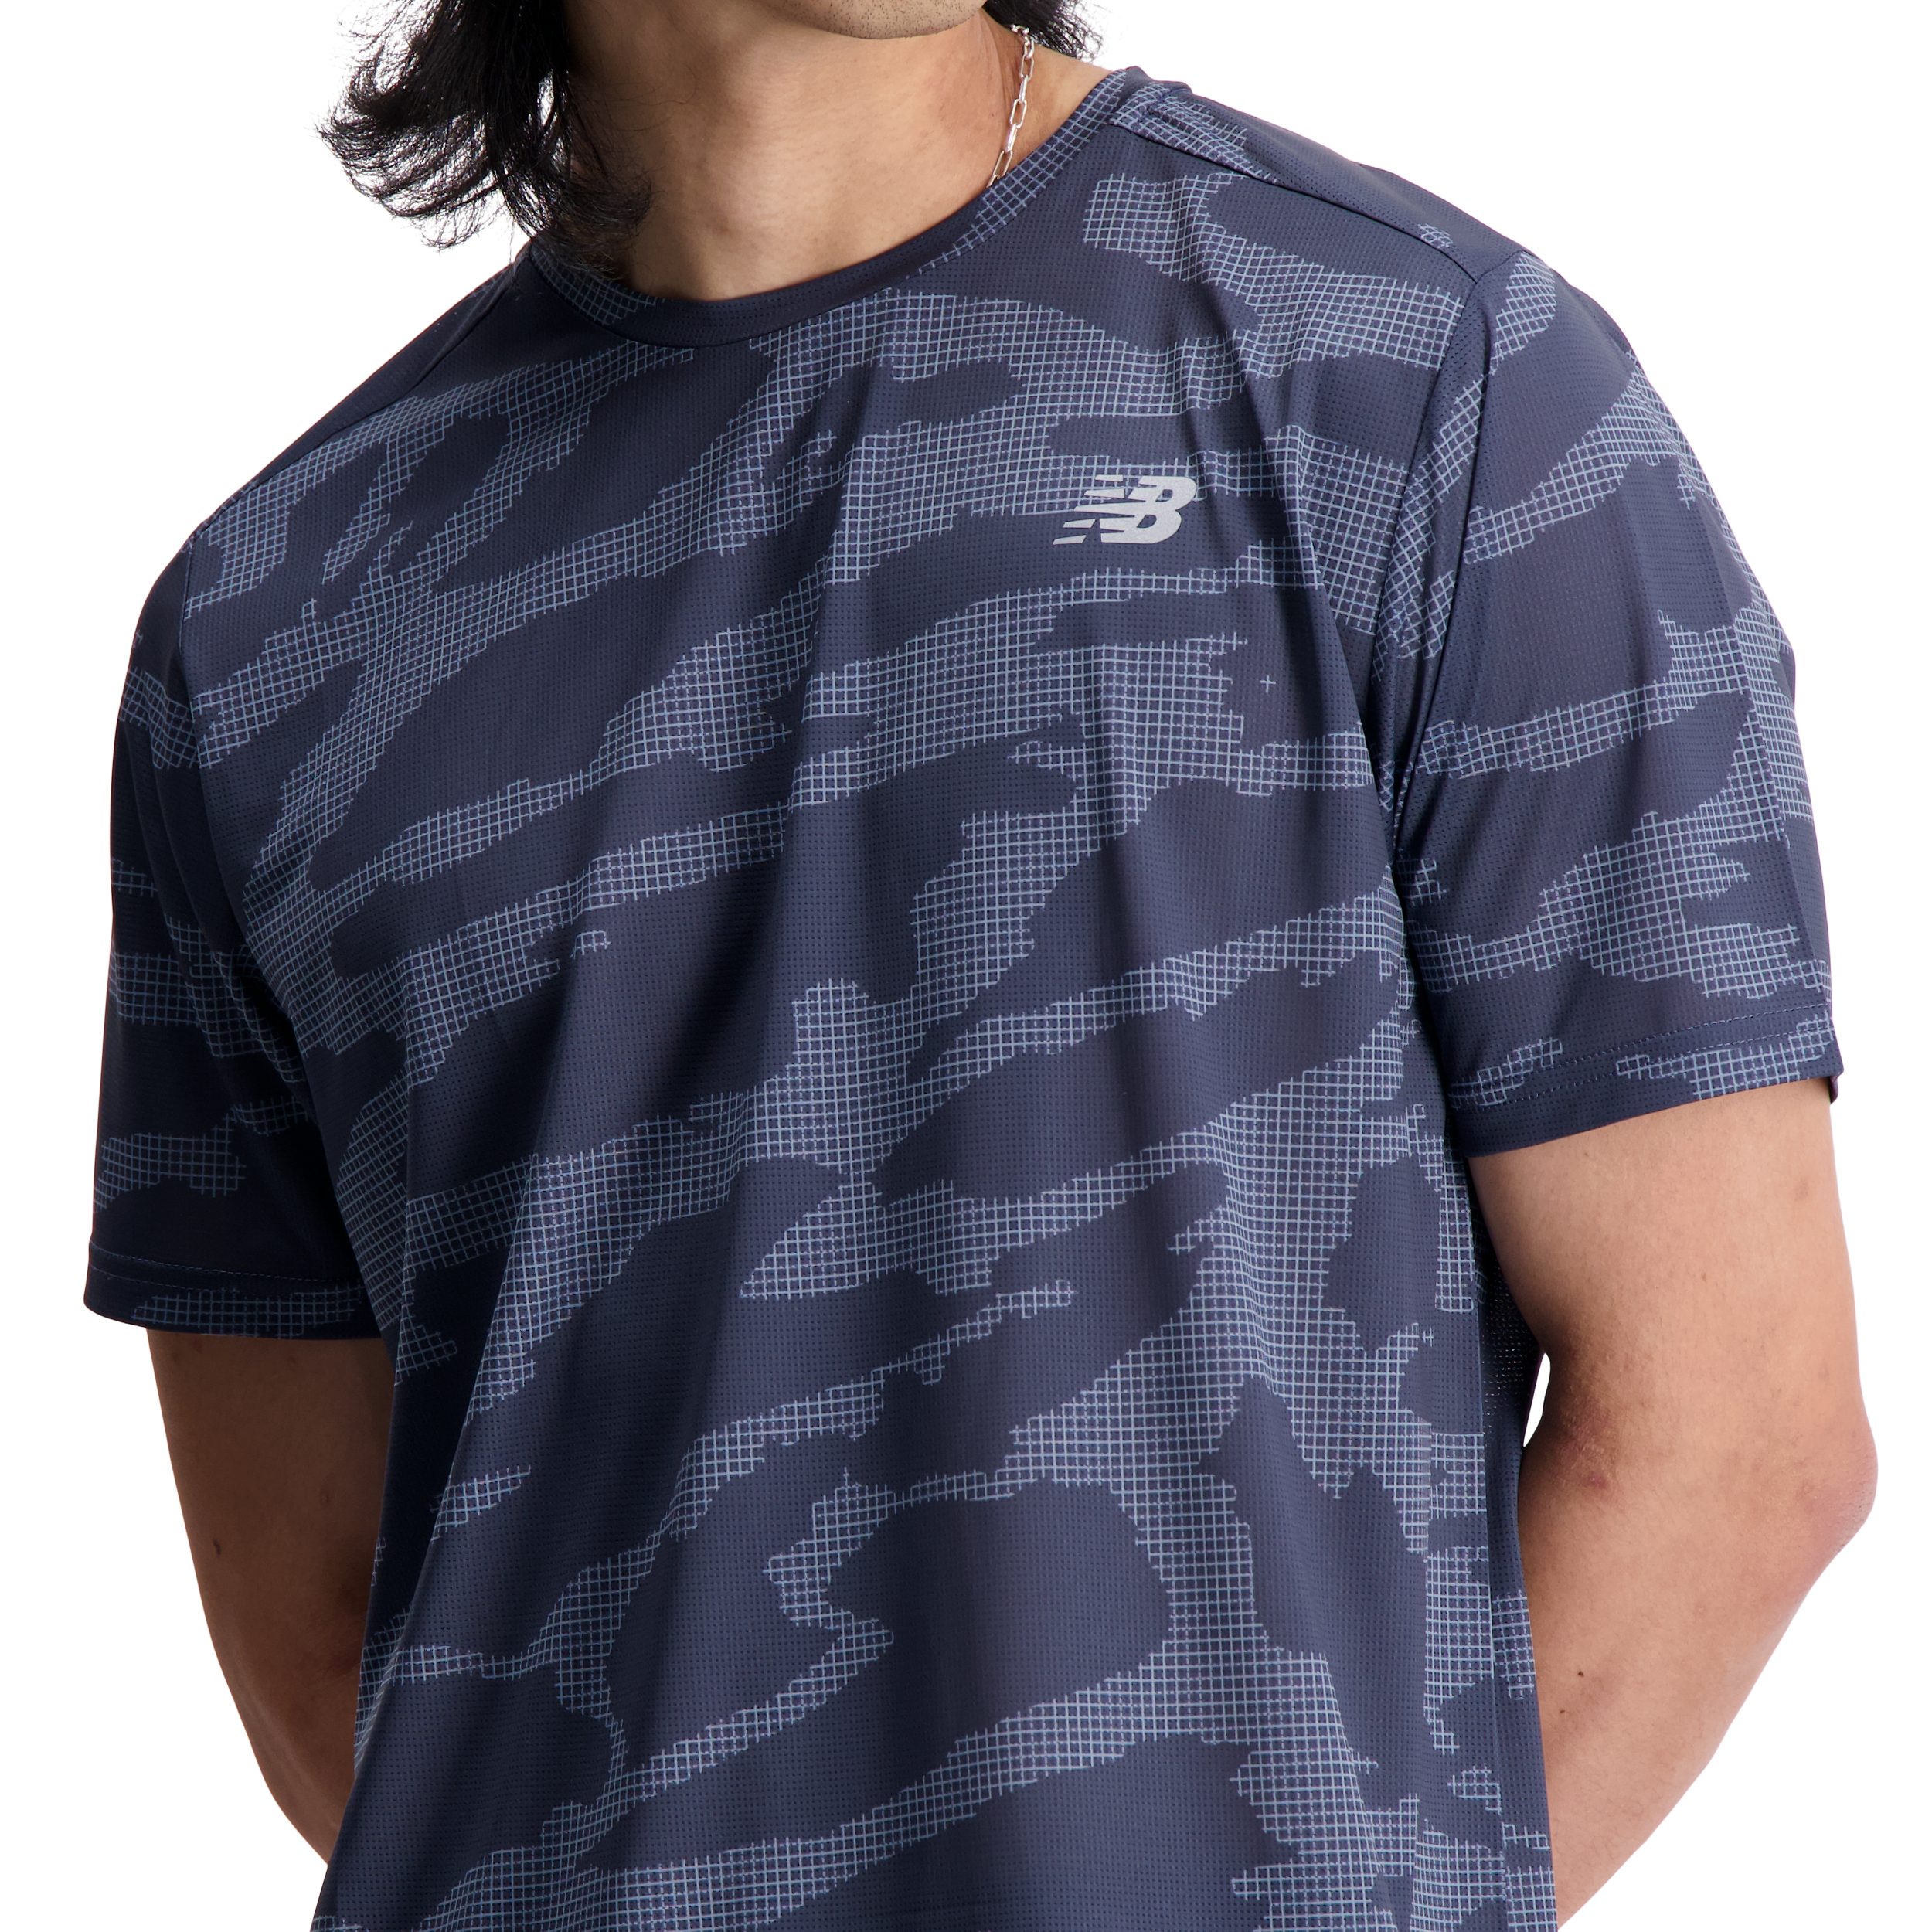 New grey T-Shirt Balance 030